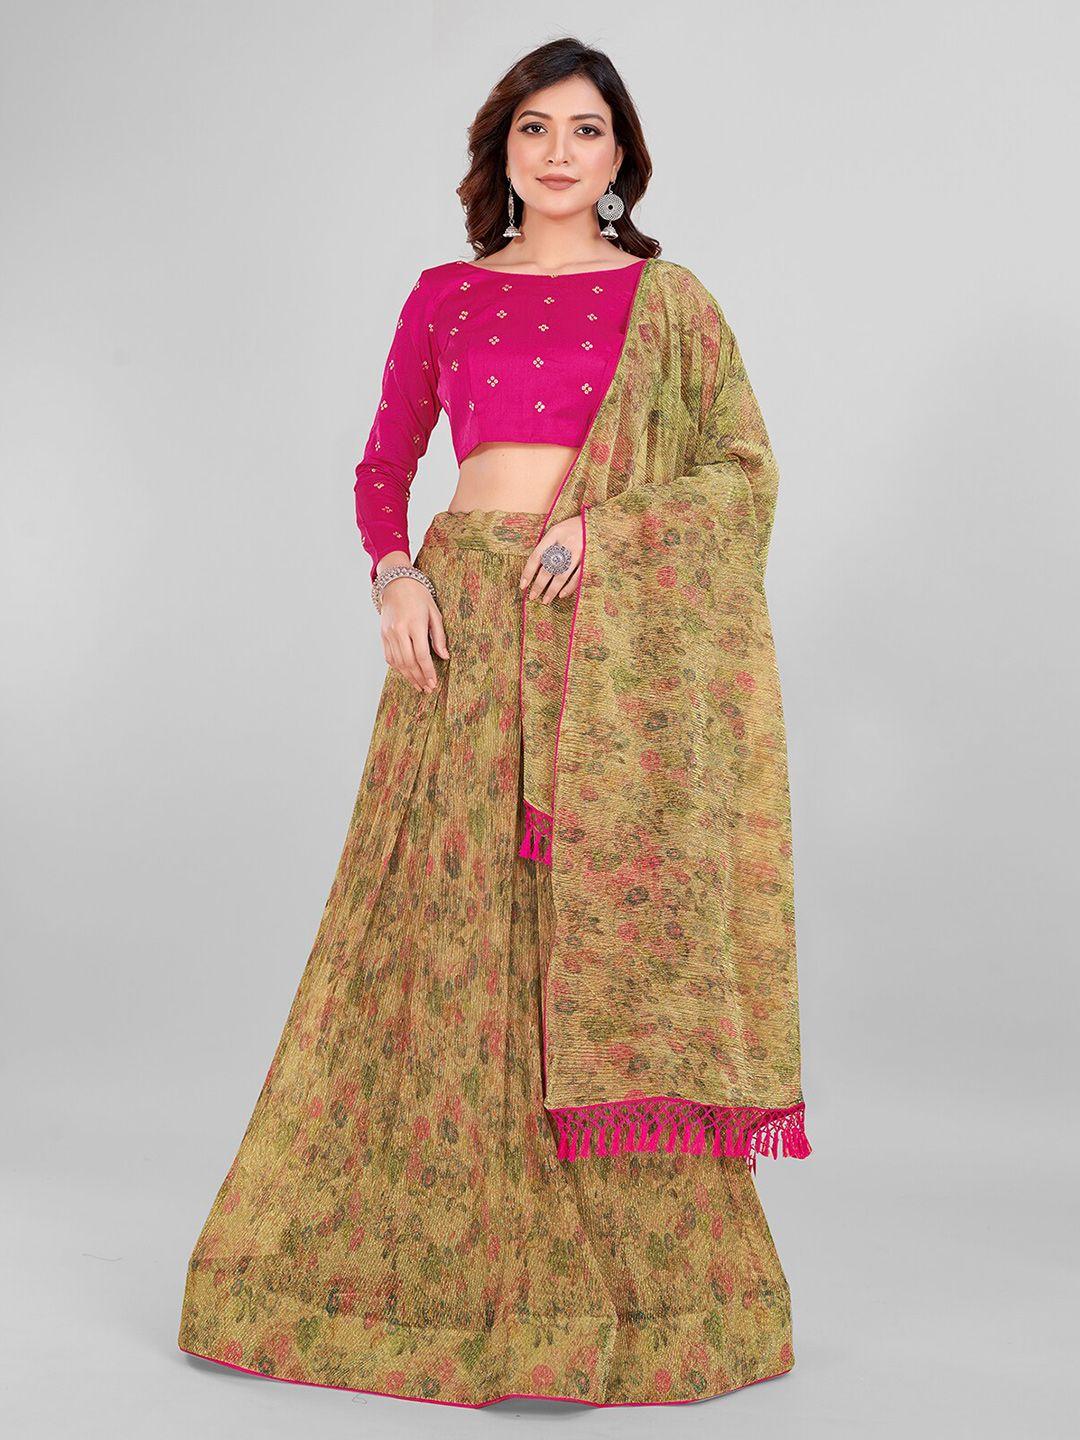 granthva fab embroidered semi-stitched lehenga & unstitched blouse with dupatta